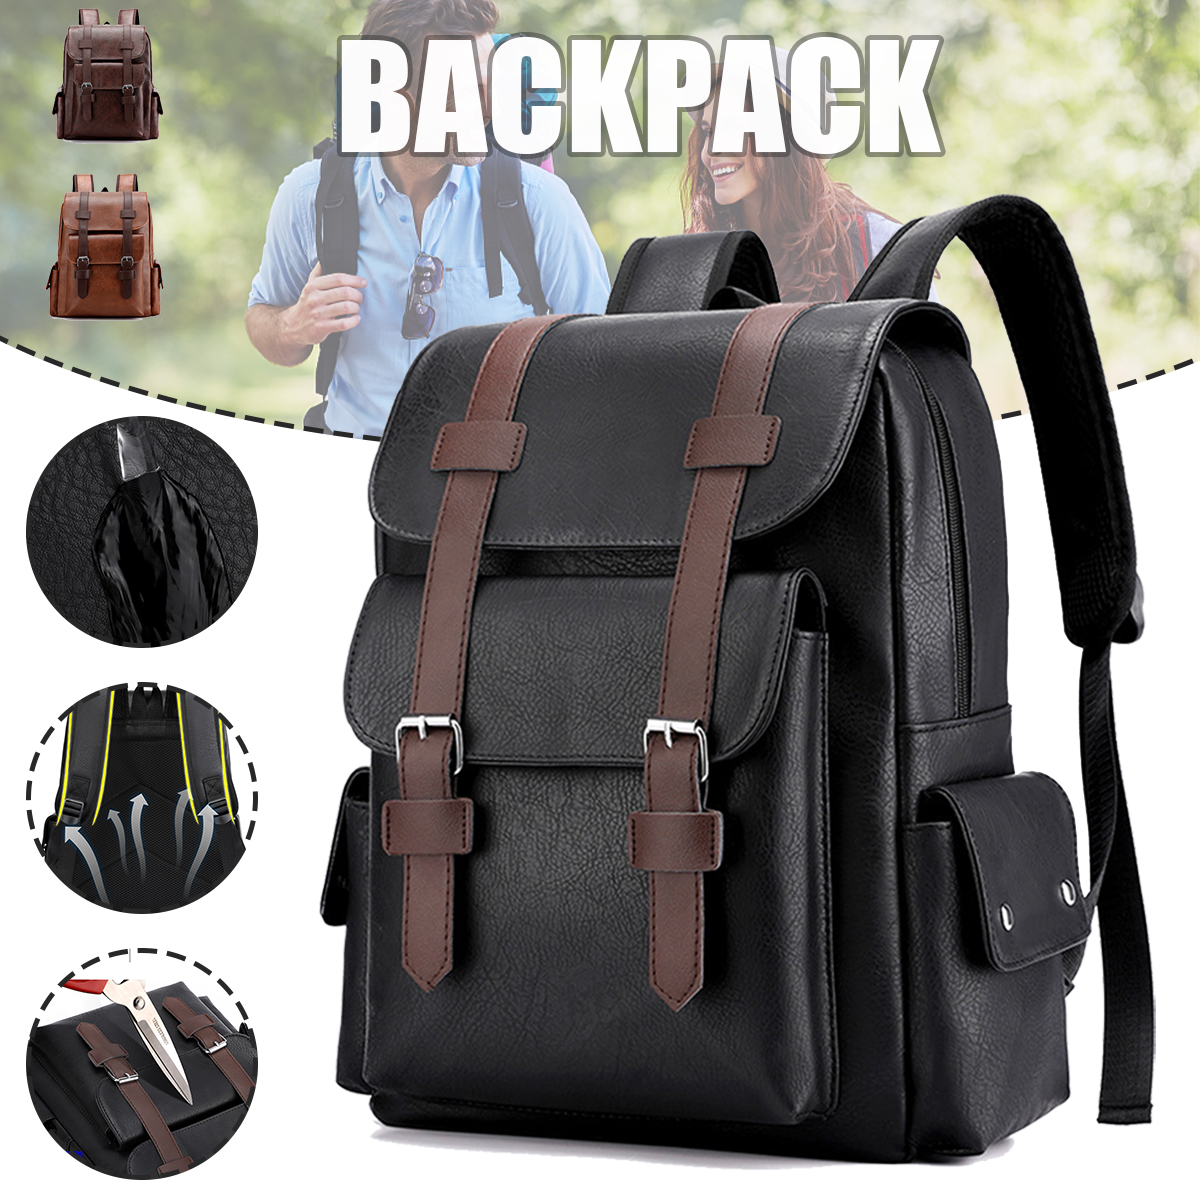 Men-Leather-School-Backpacks-Outdoor-Travel-Satchel-Shoulder-Bag-Rucksack-Satchel-Handbag-1698999-1